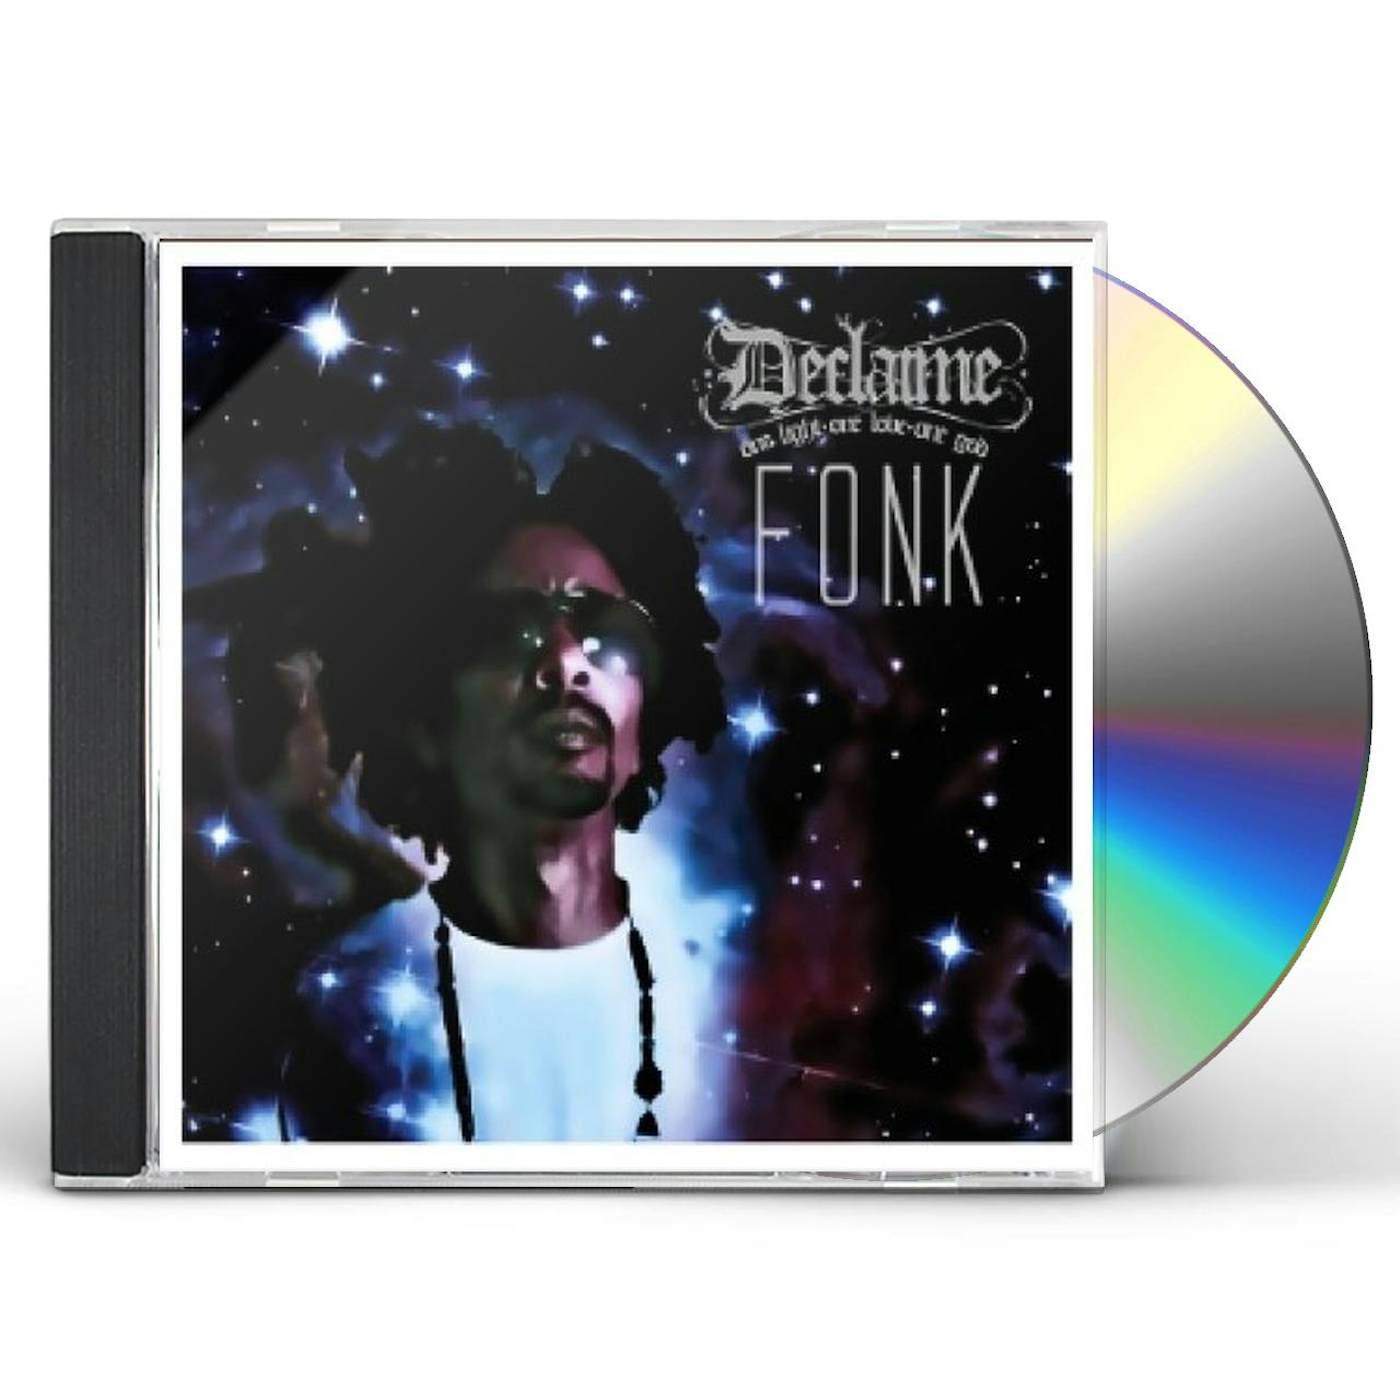 Declaime FONK CD